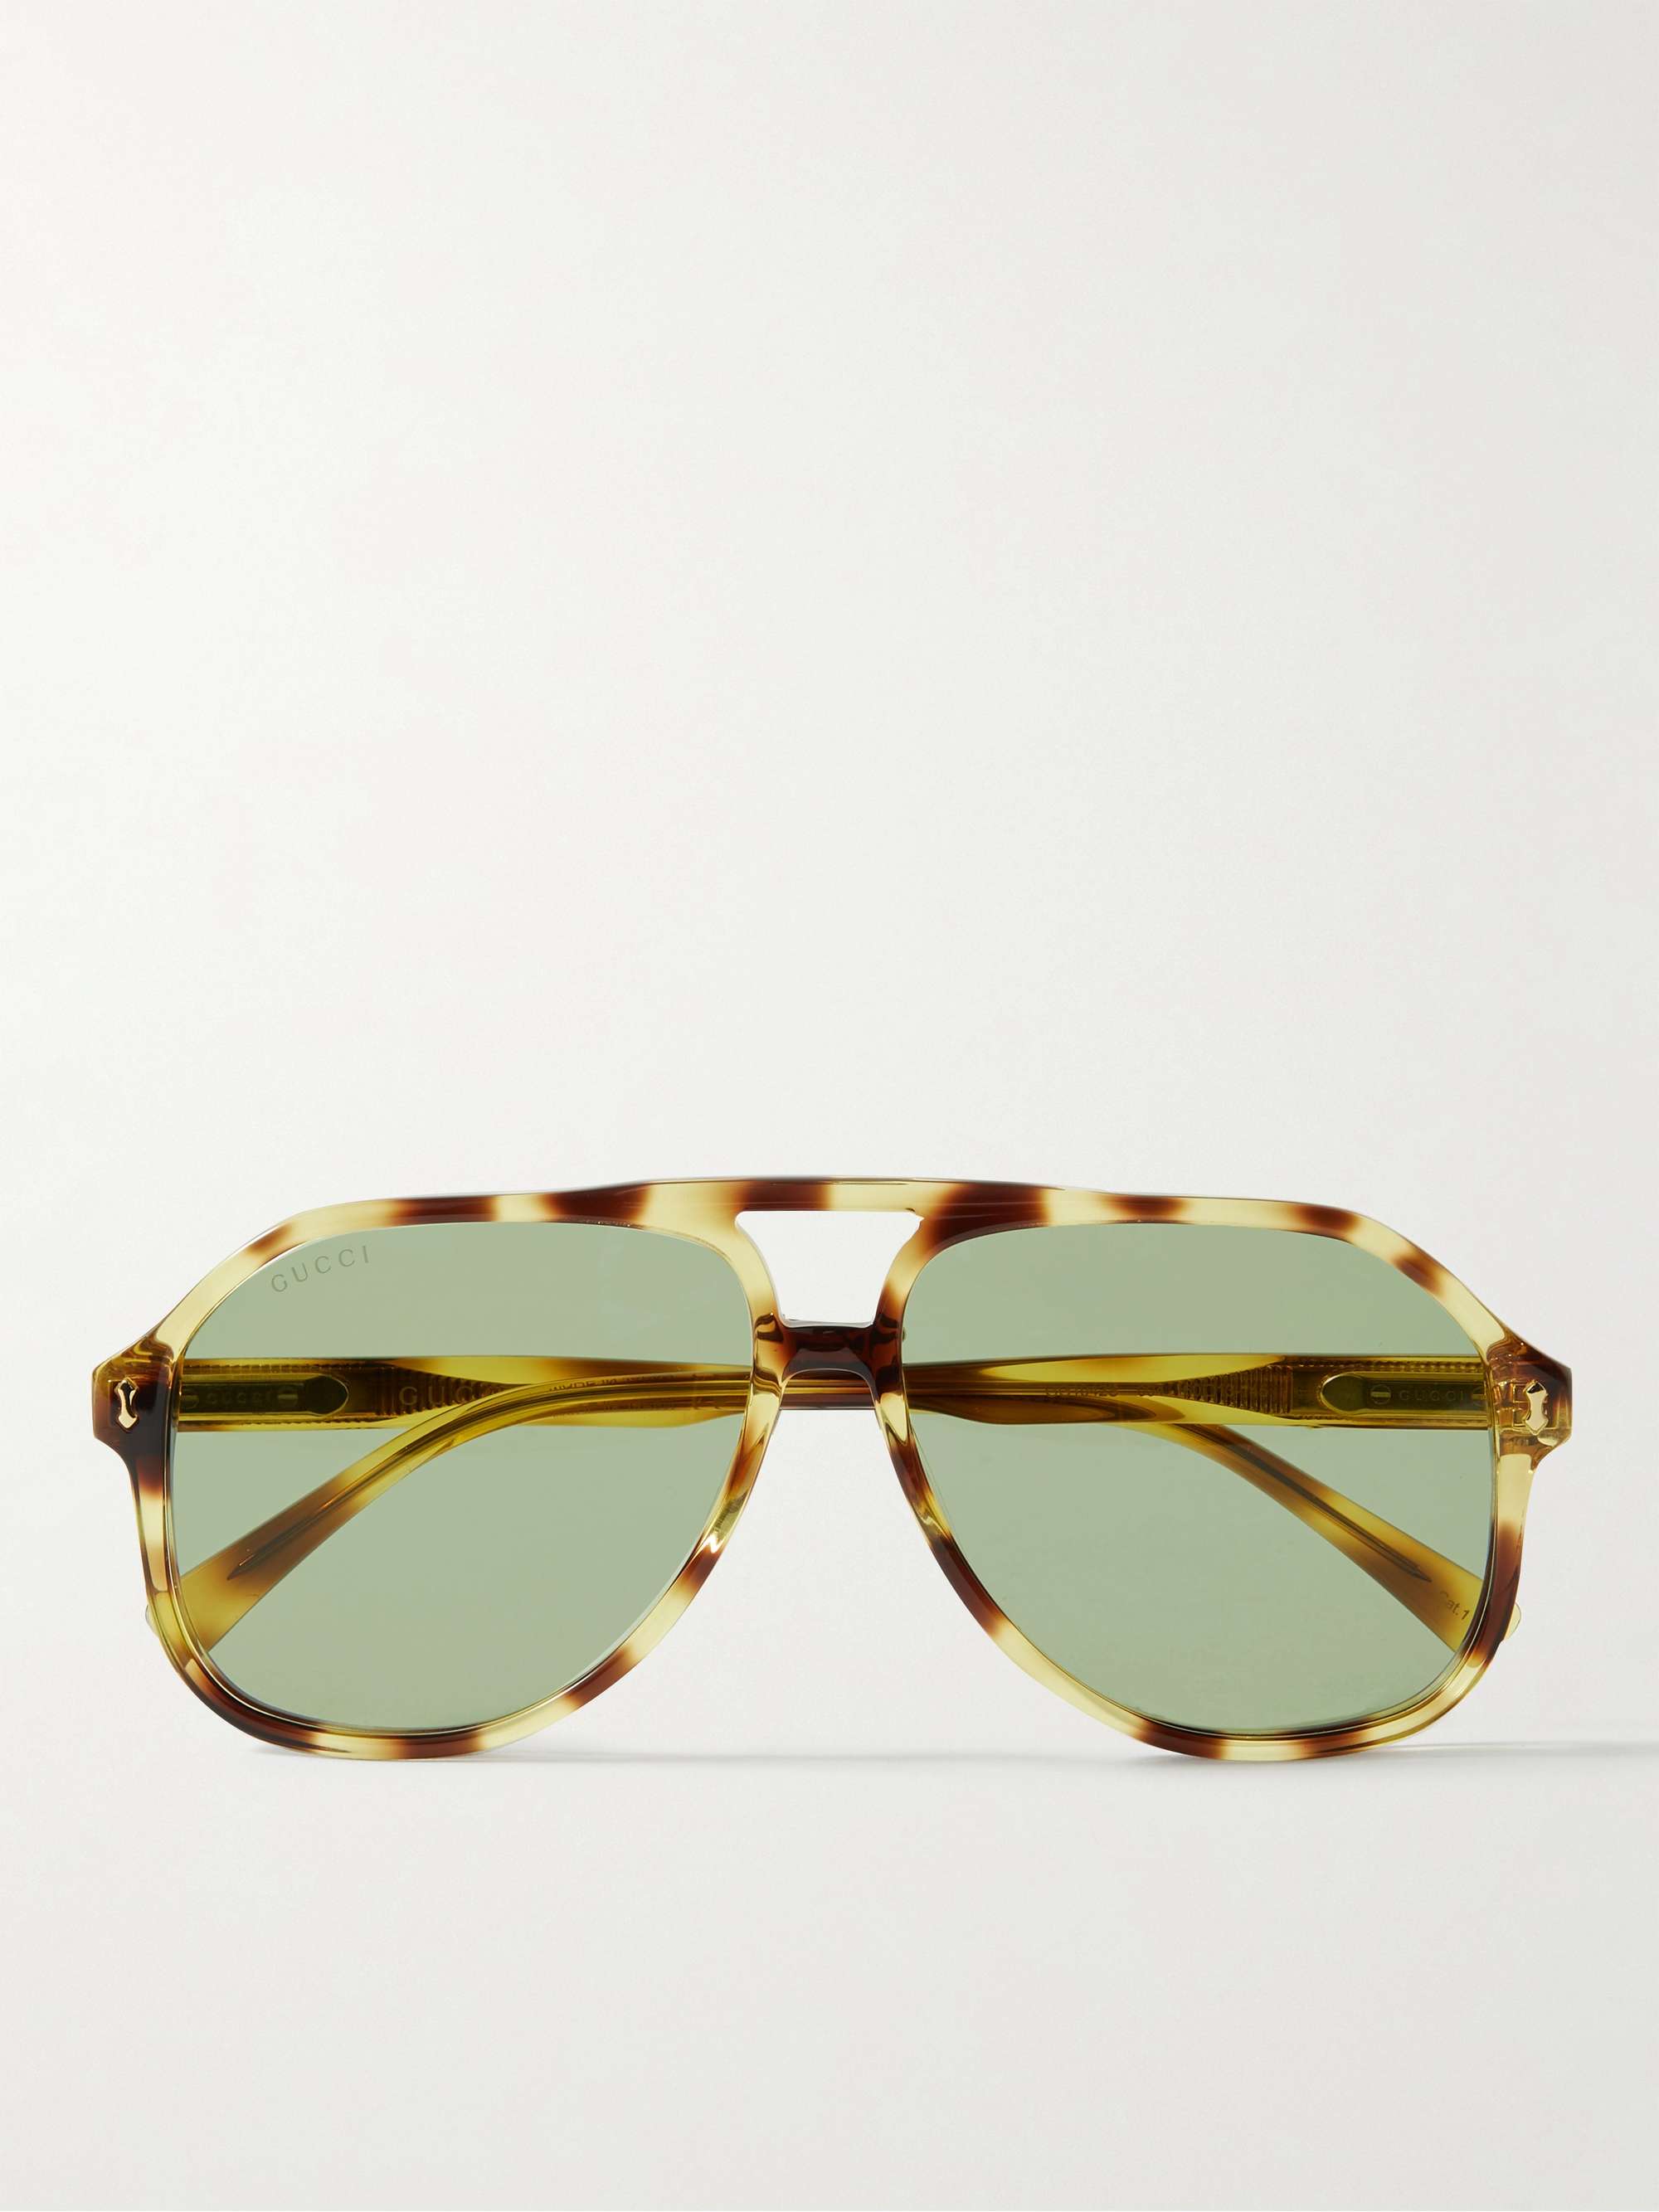 GUCCI EYEWEAR Aviator-Style Tortoiseshell Acetate Sunglasses